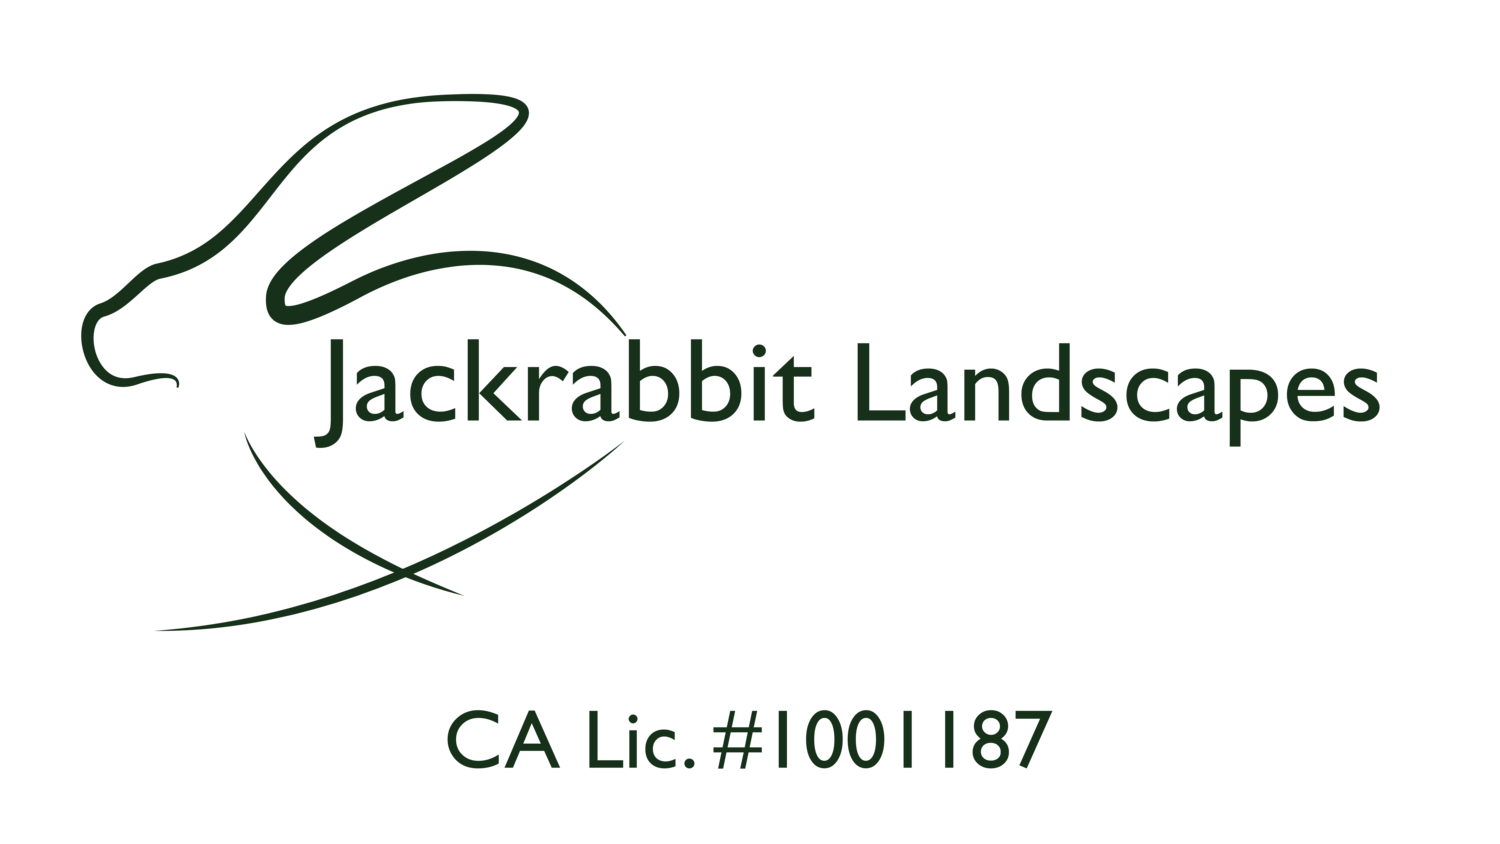 Jackrabbit Landscapes